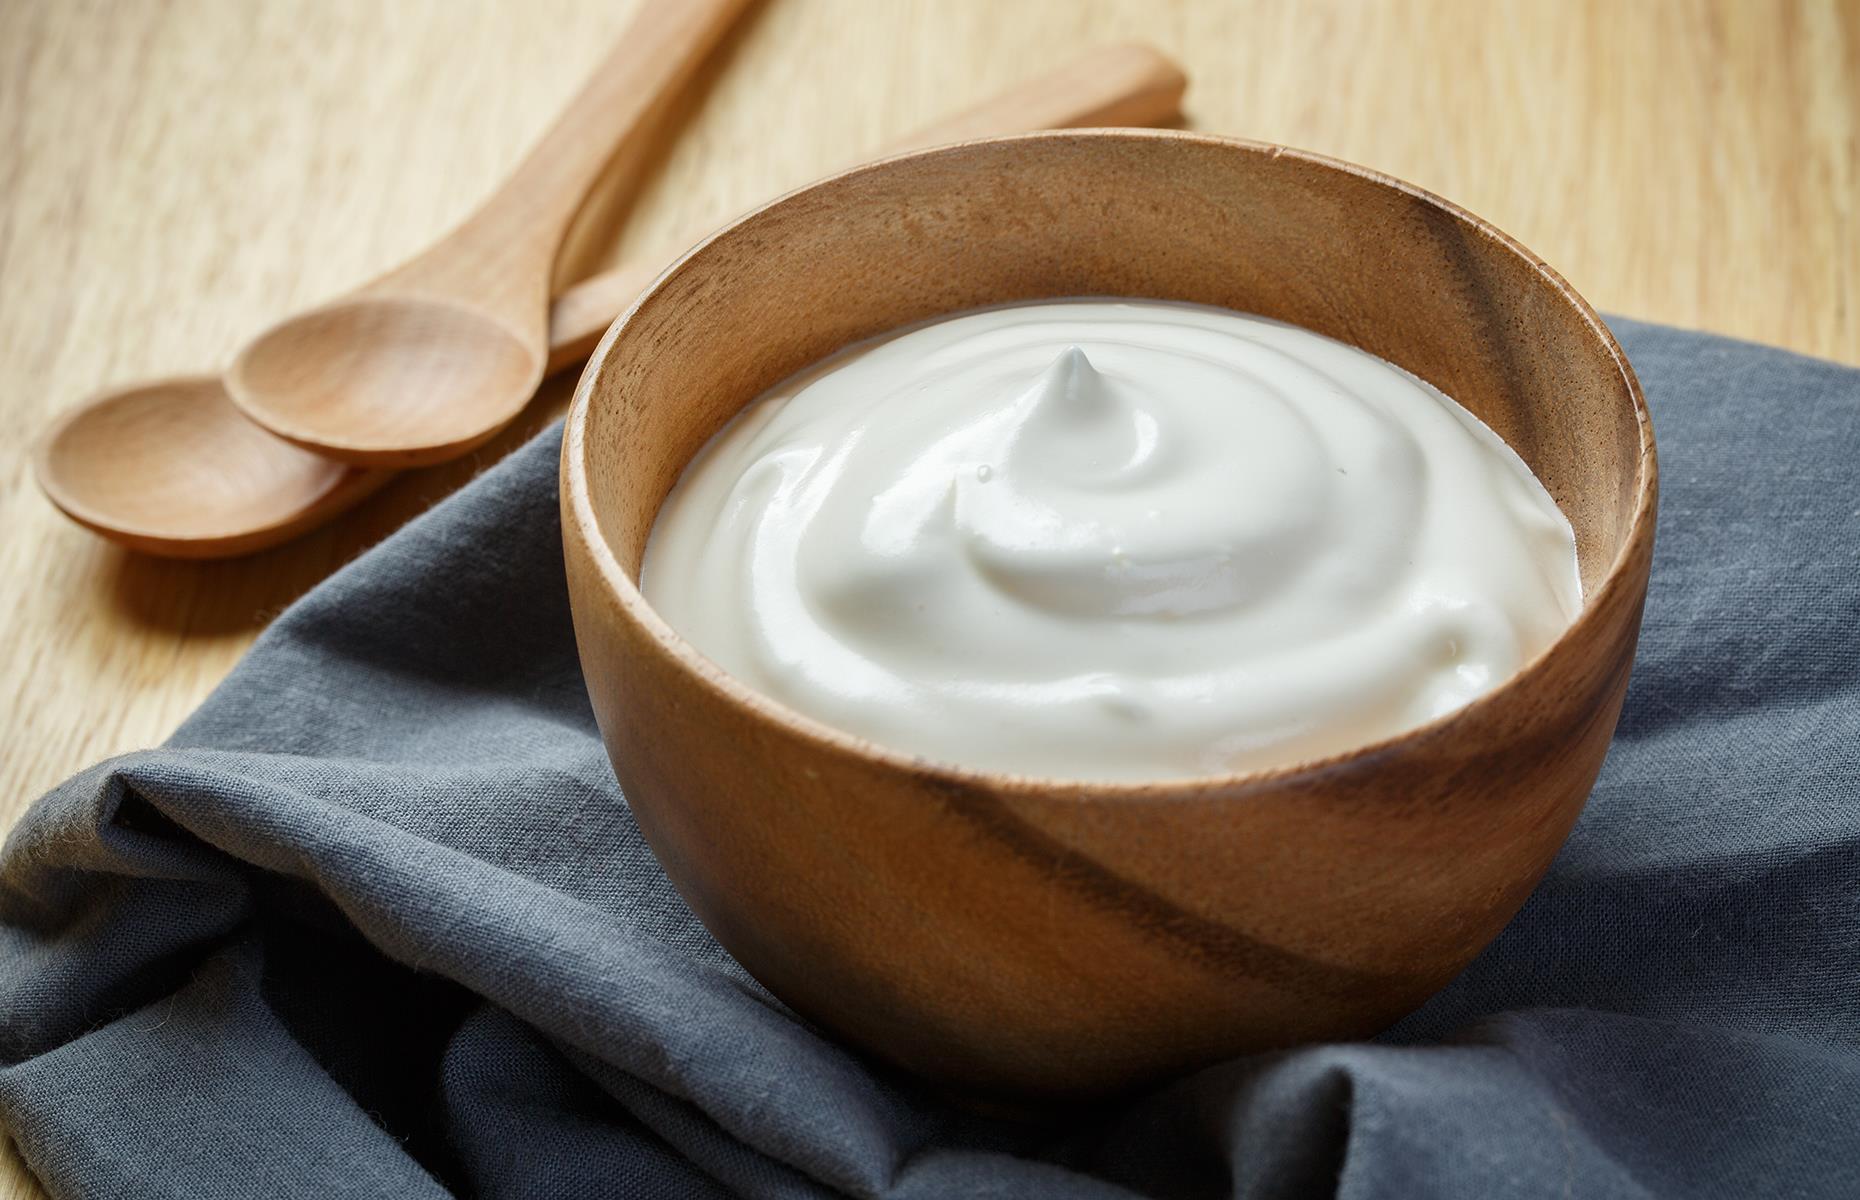 Probiotic yoghurt is good for us